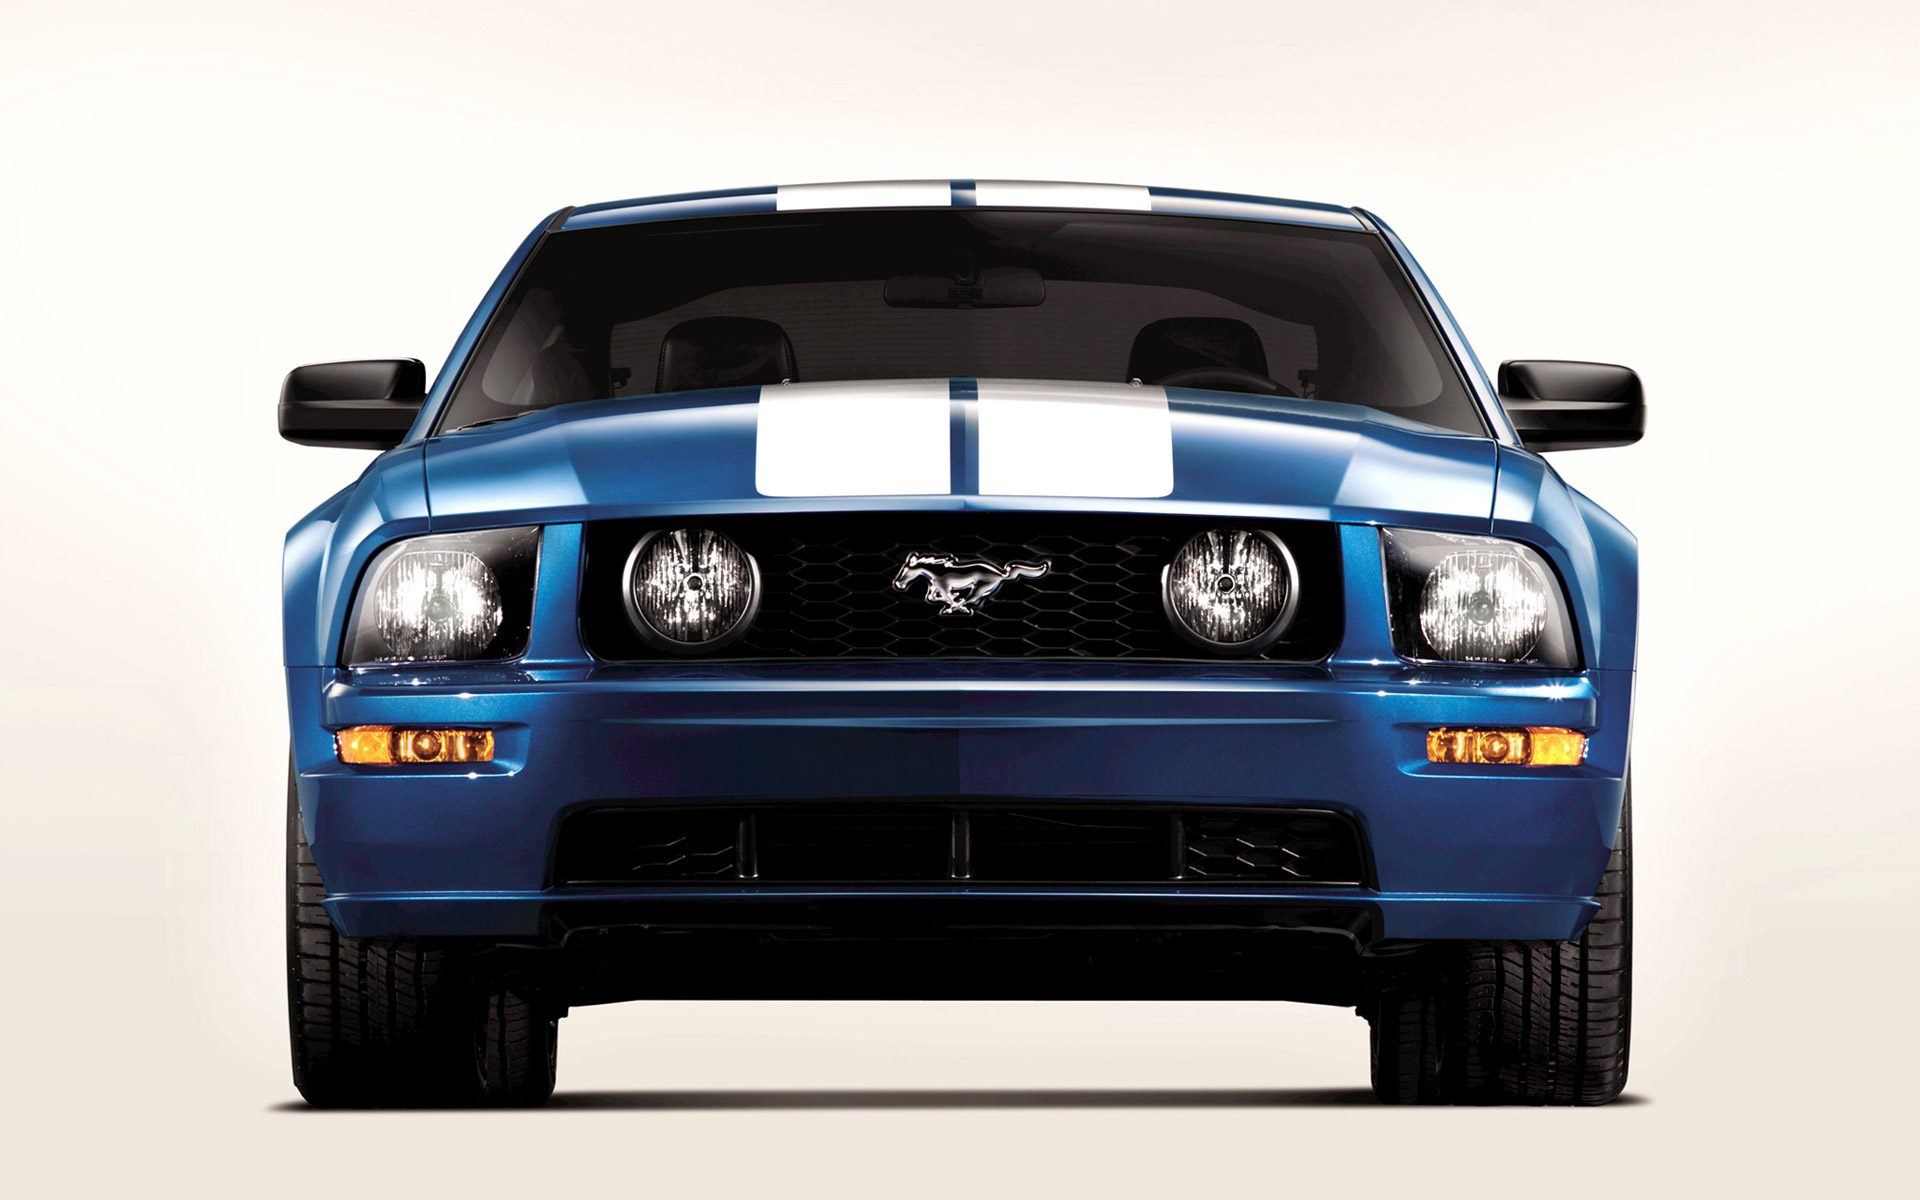  2005 Ford Mustang GT Wallpaper.